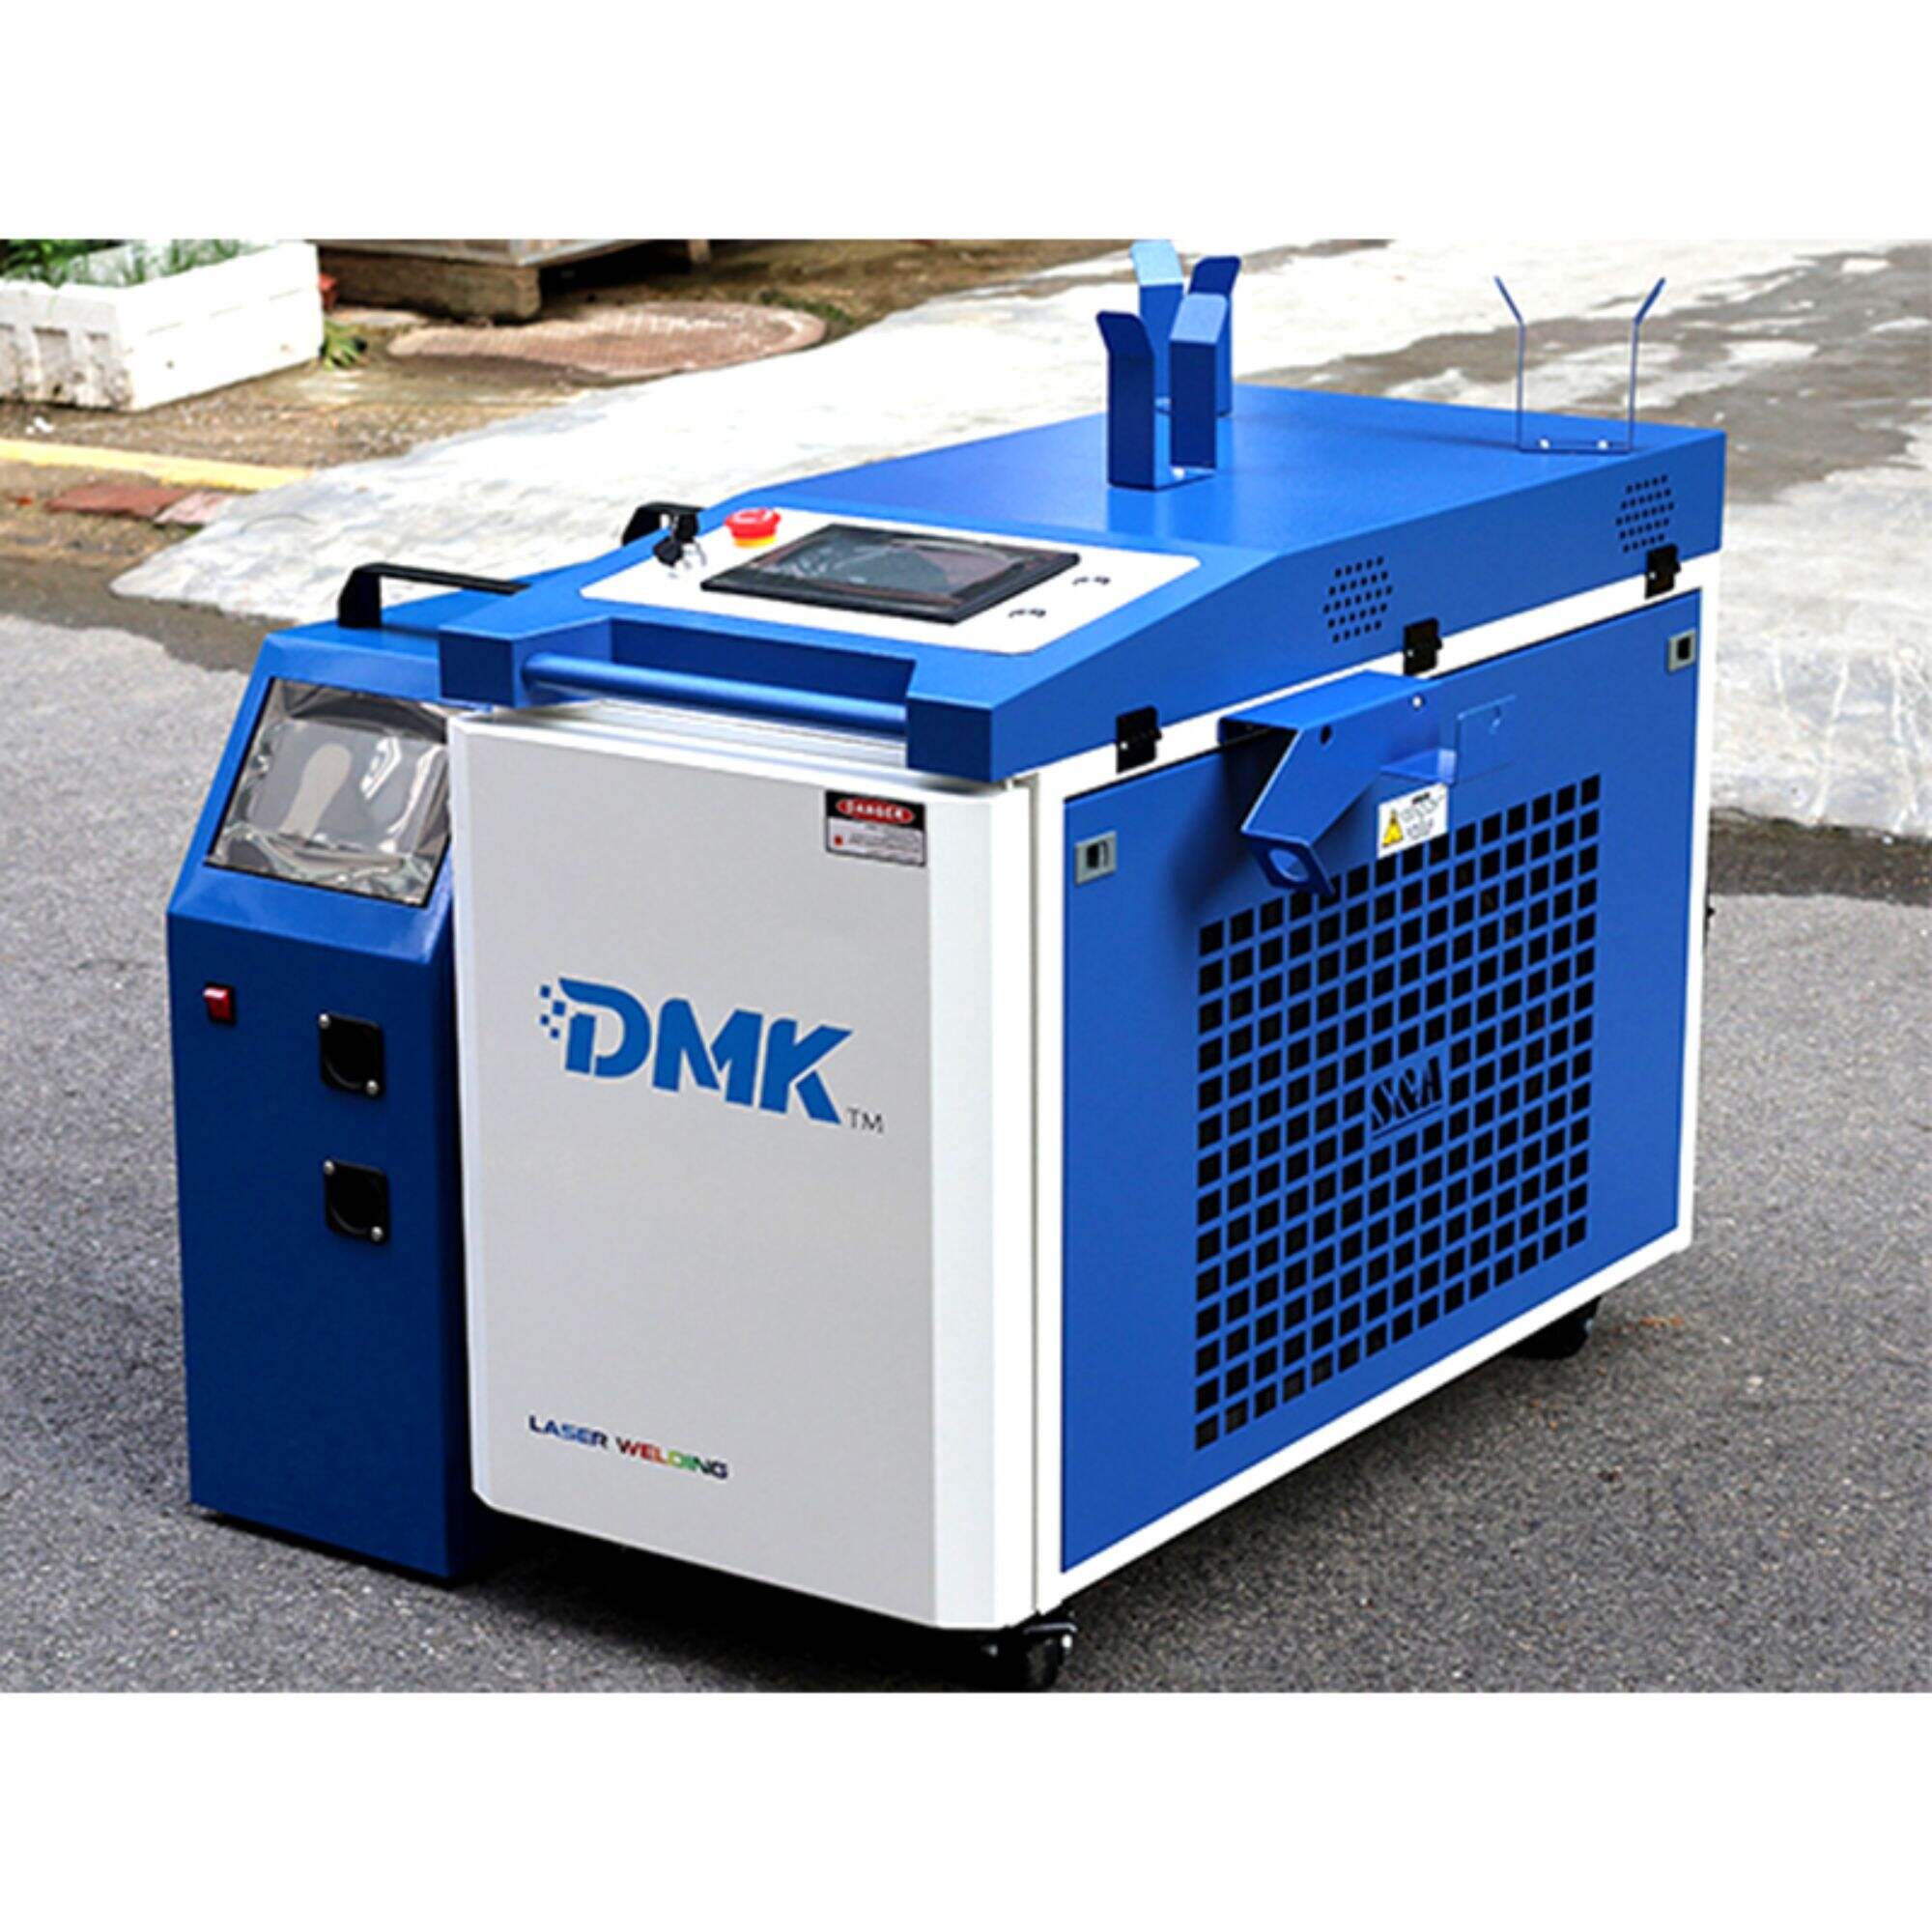 DMK 1500W Entegre El Tipi Fiber Lazer Kaynak Makinesi